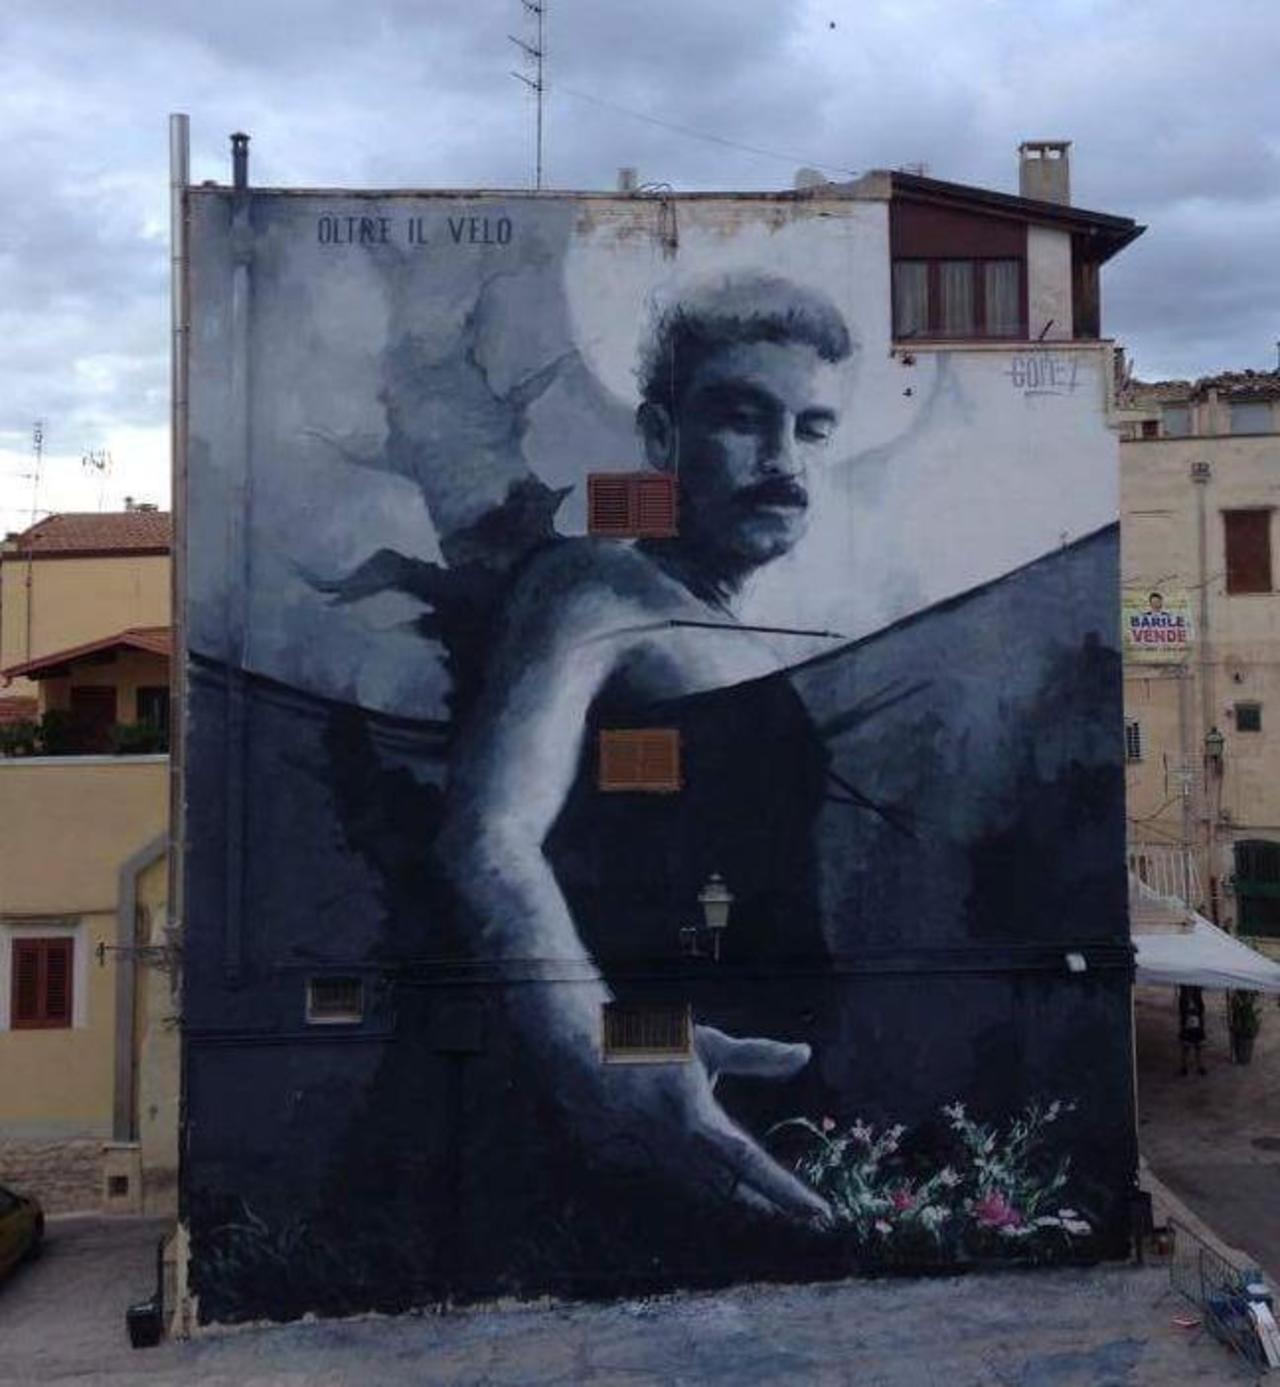 #art #streetart #graffiti by 
#Gomez https://t.co/8N0OtEr8oi